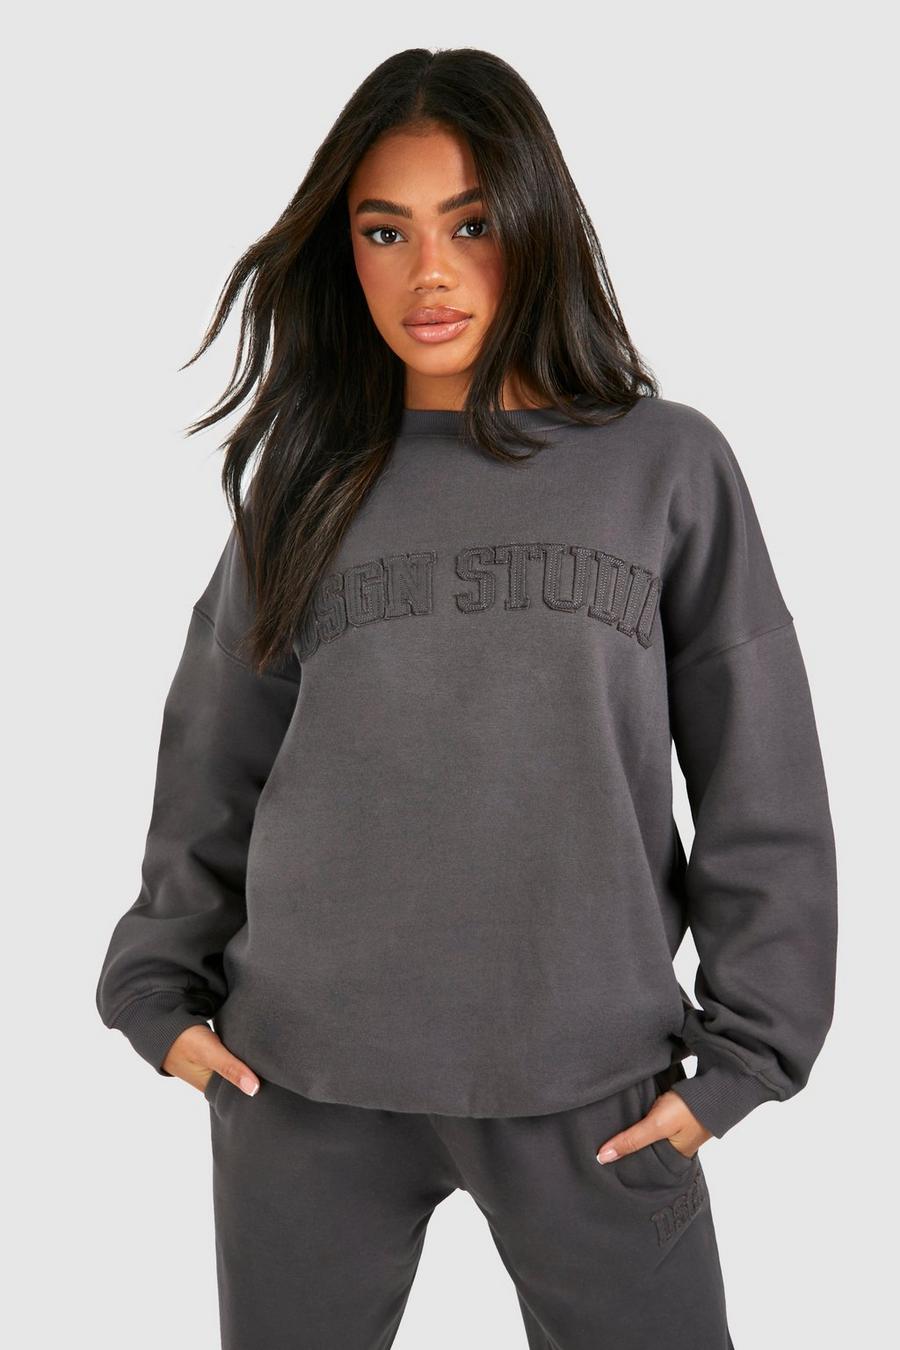 Charcoal Dsgn Studio Oversize sweatshirt med applikation